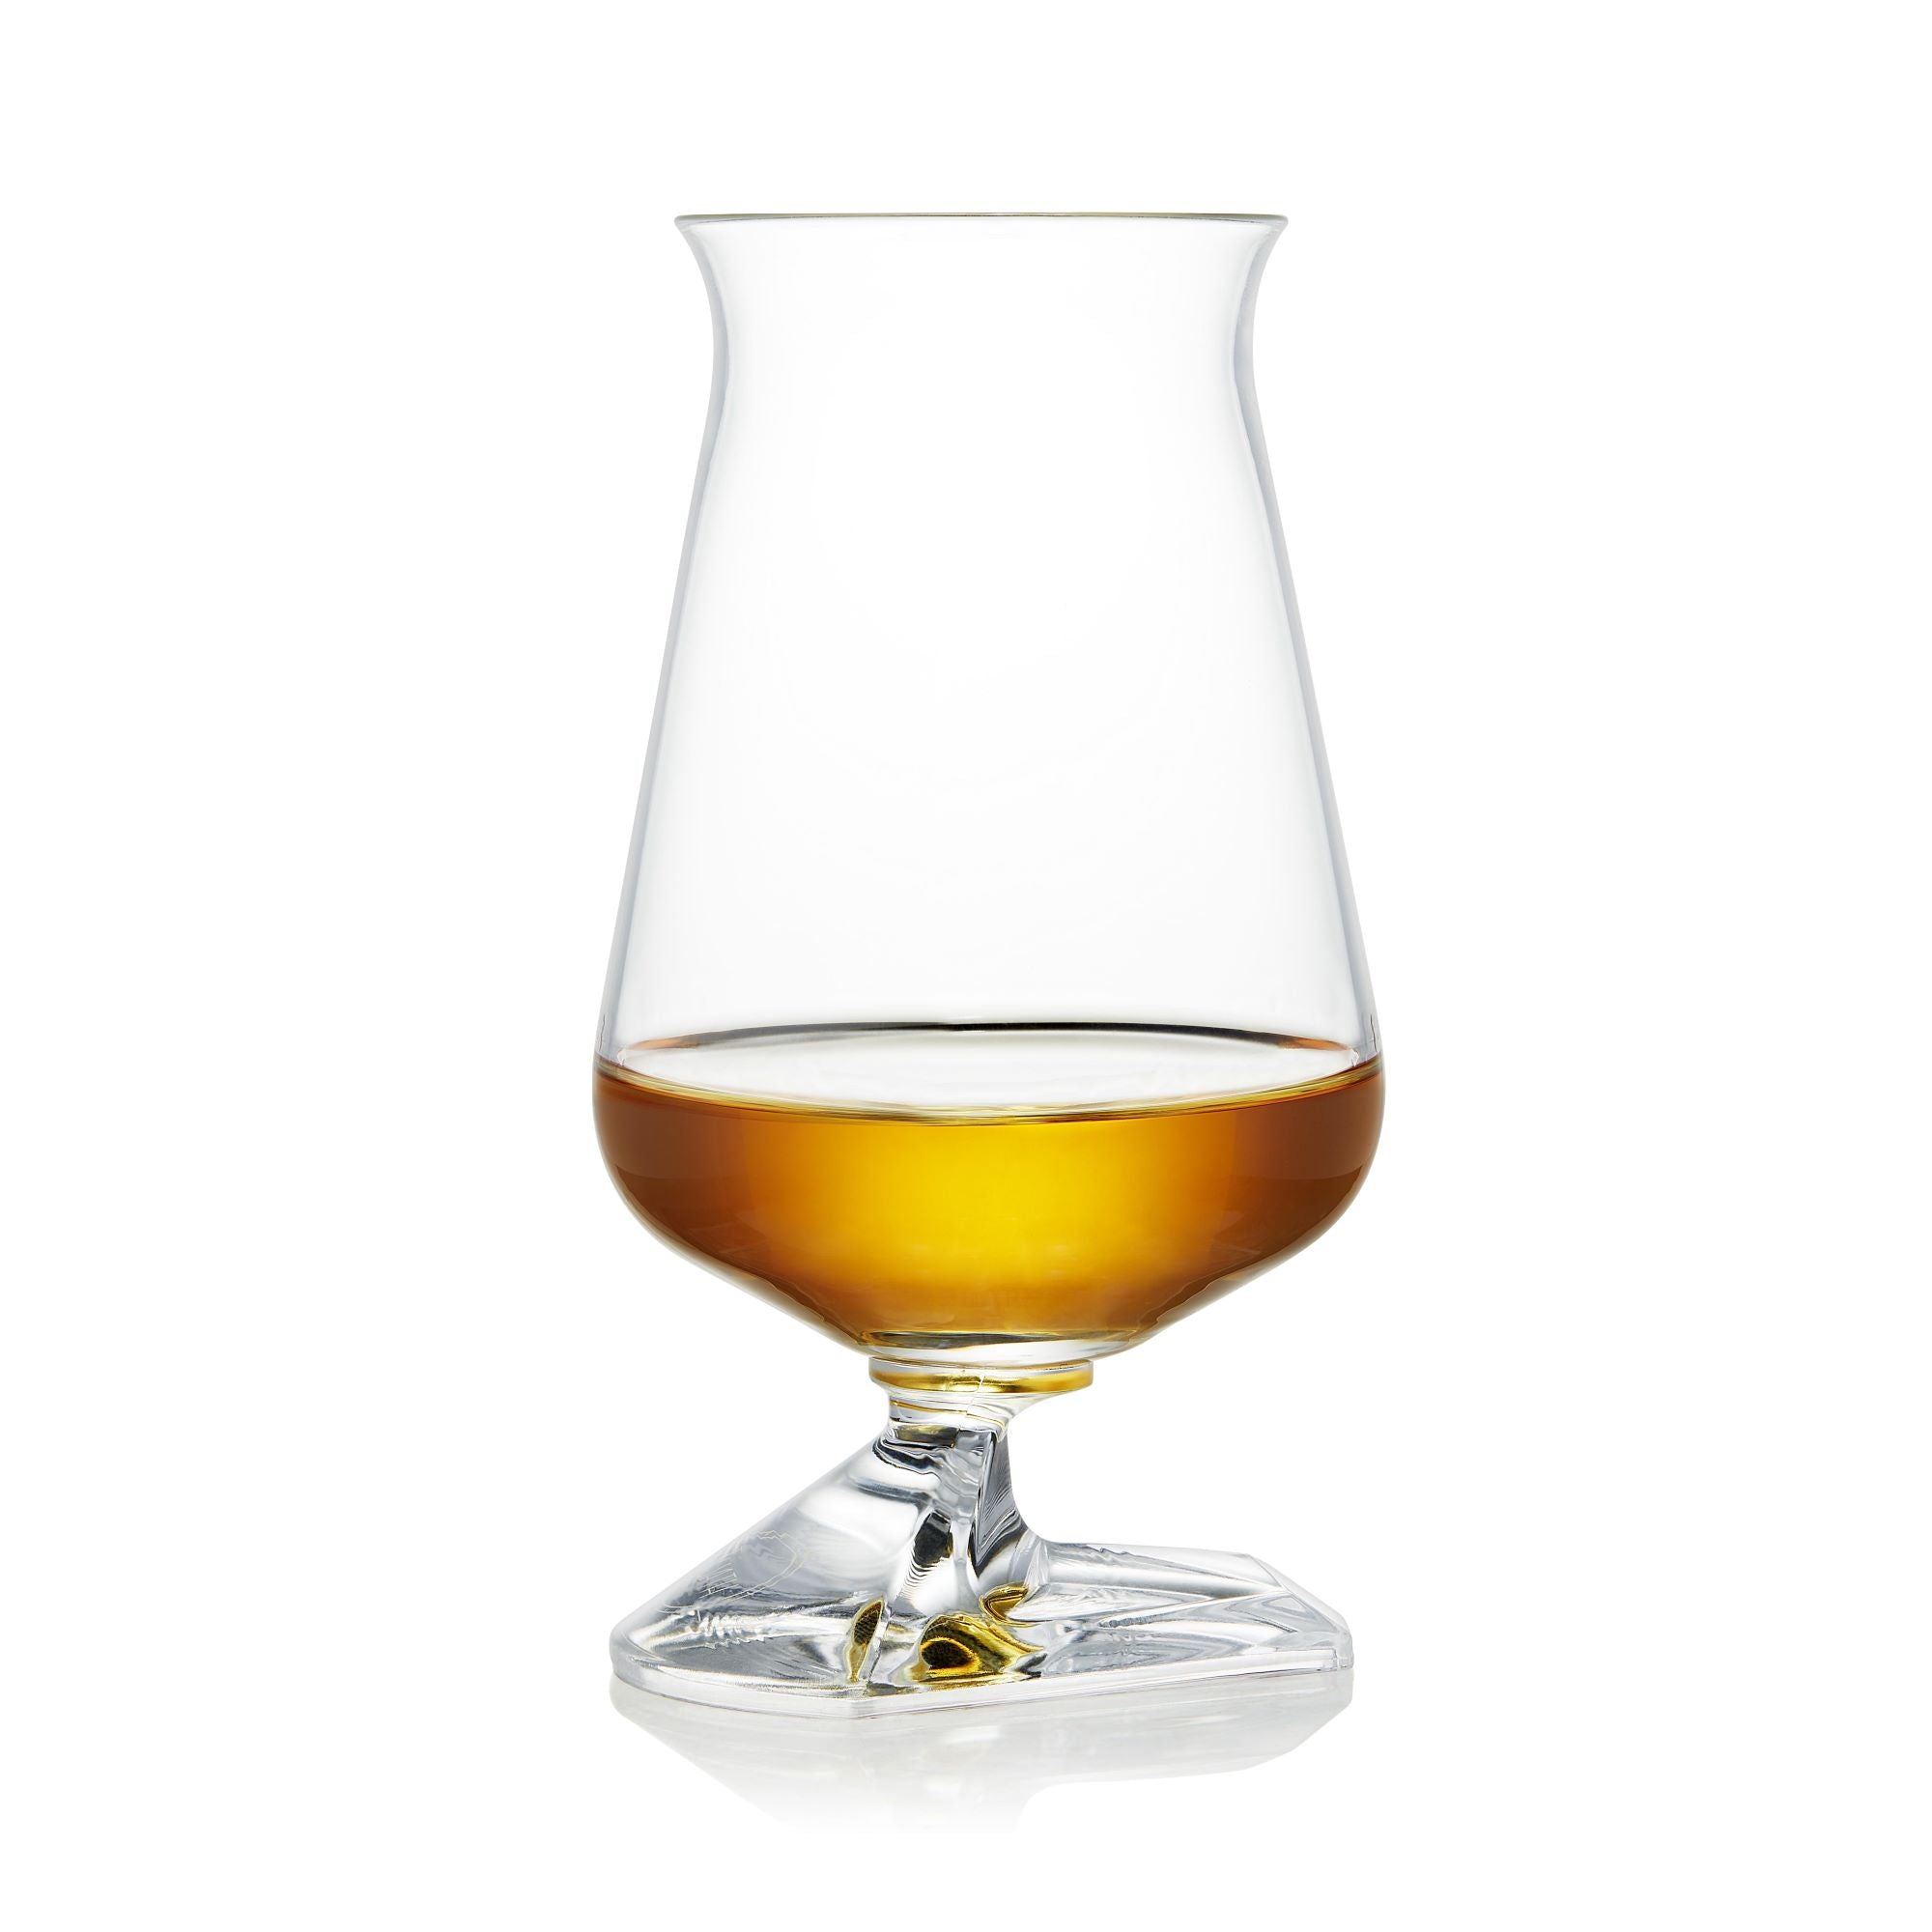 Tuath Irish Whiskey Glass 21cl